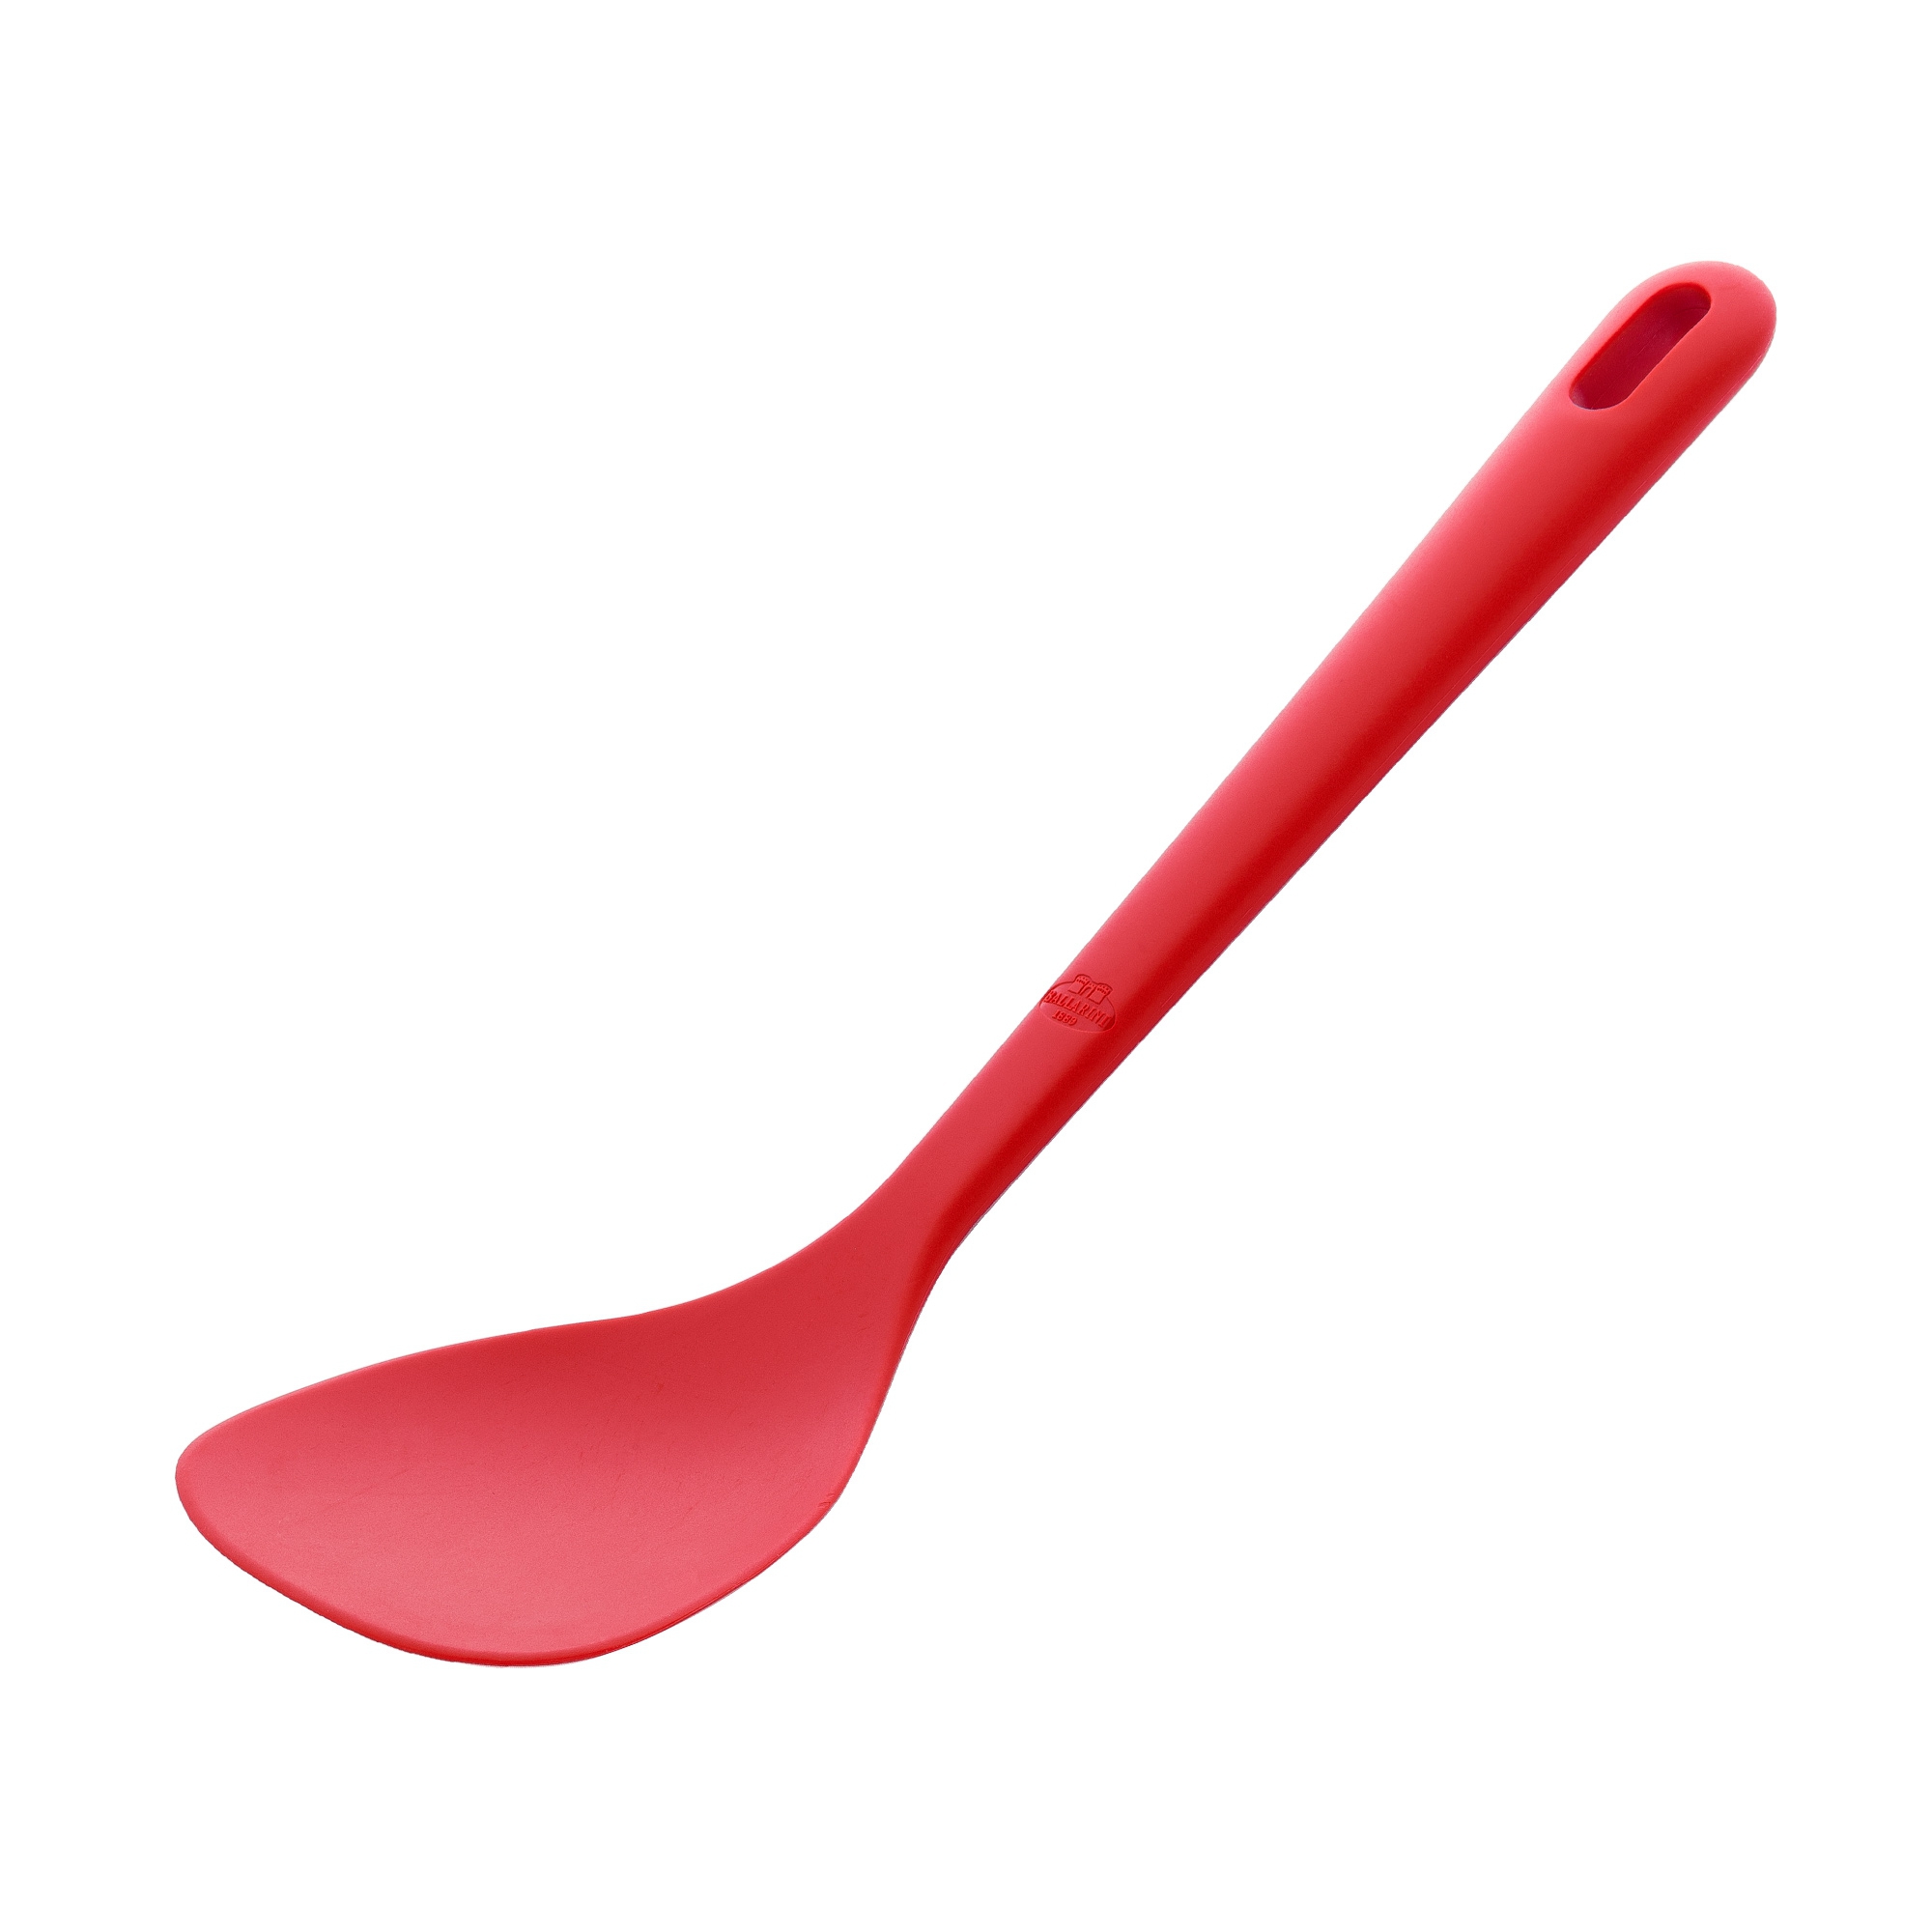 Ballarini - wok turner 31 cm - Rosso